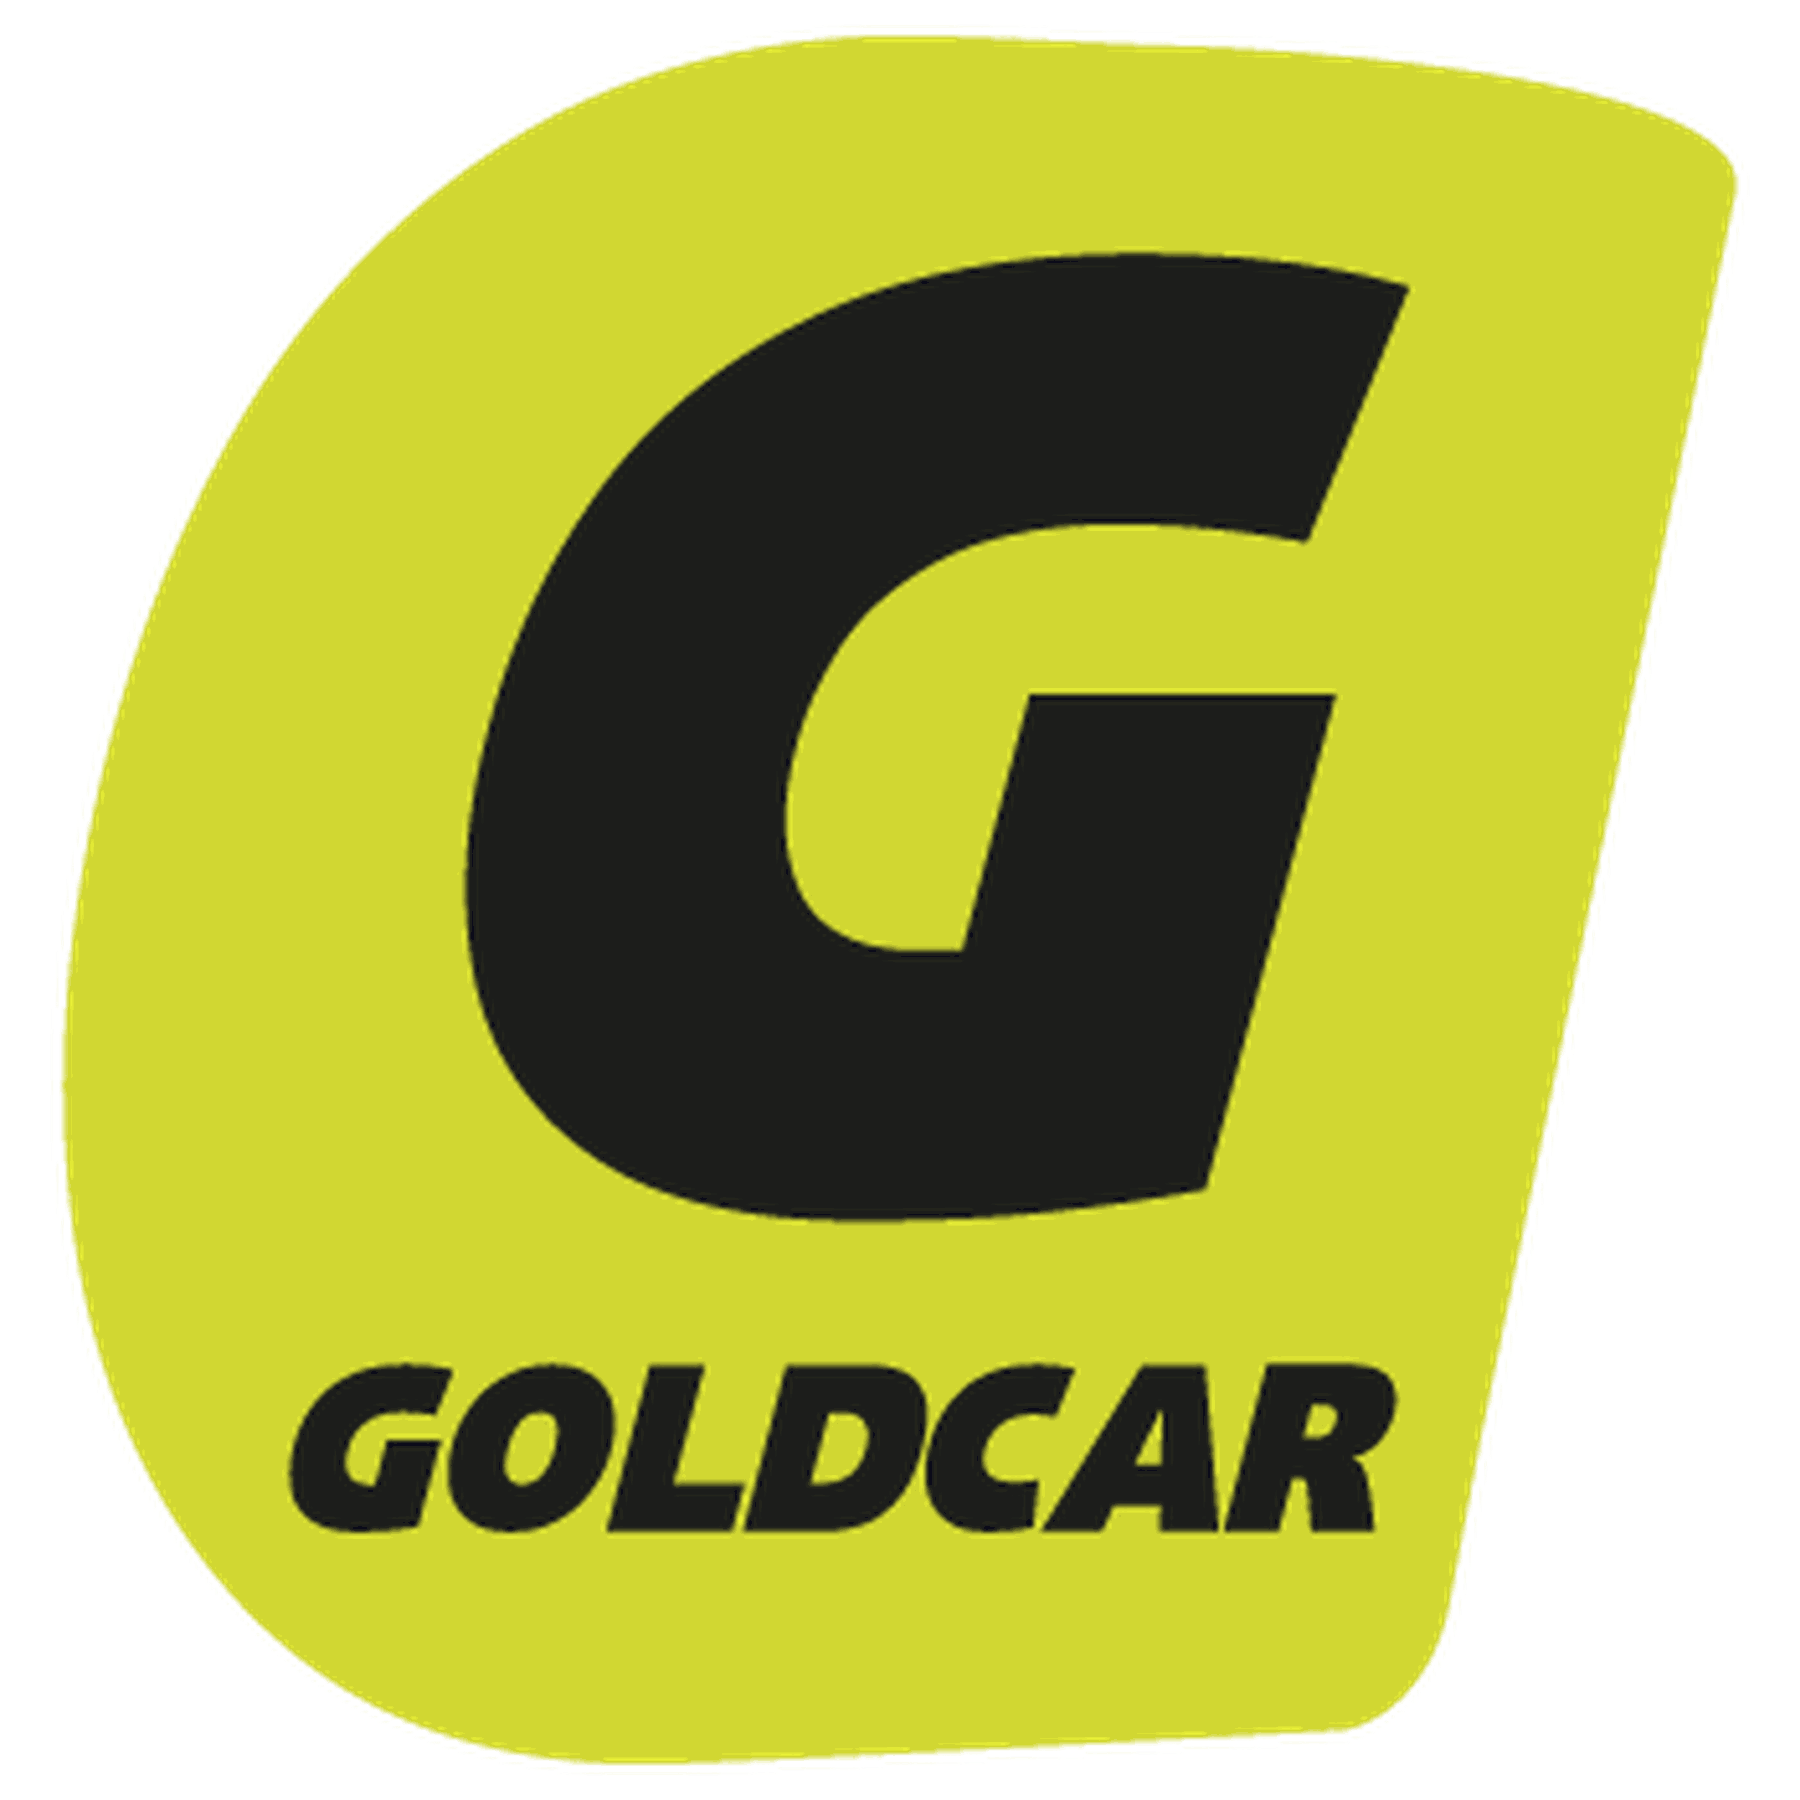 Código promocional Goldcar